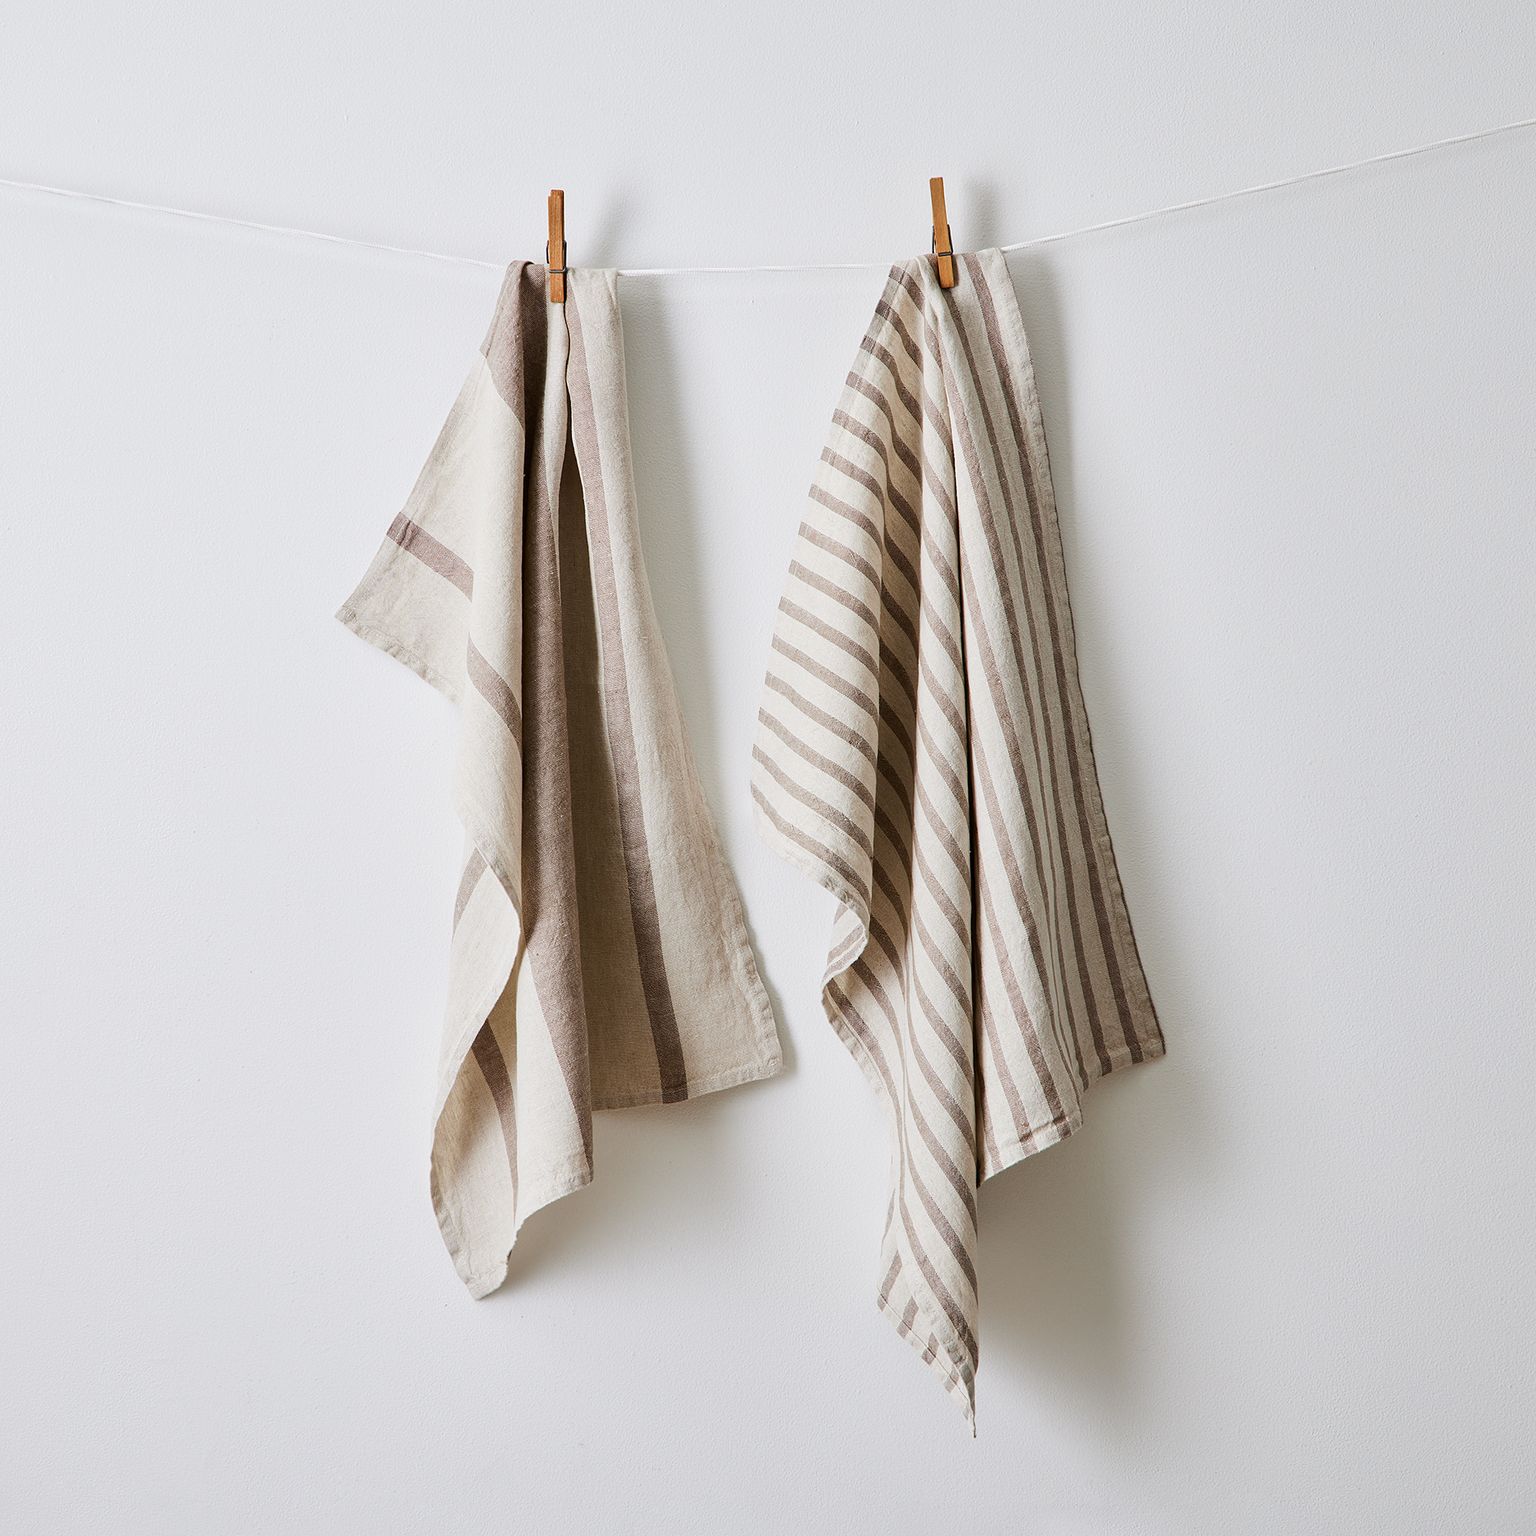 Vintage Startex Linen/Cotton Blend Kitchen, Tea Towel • Food for a Year